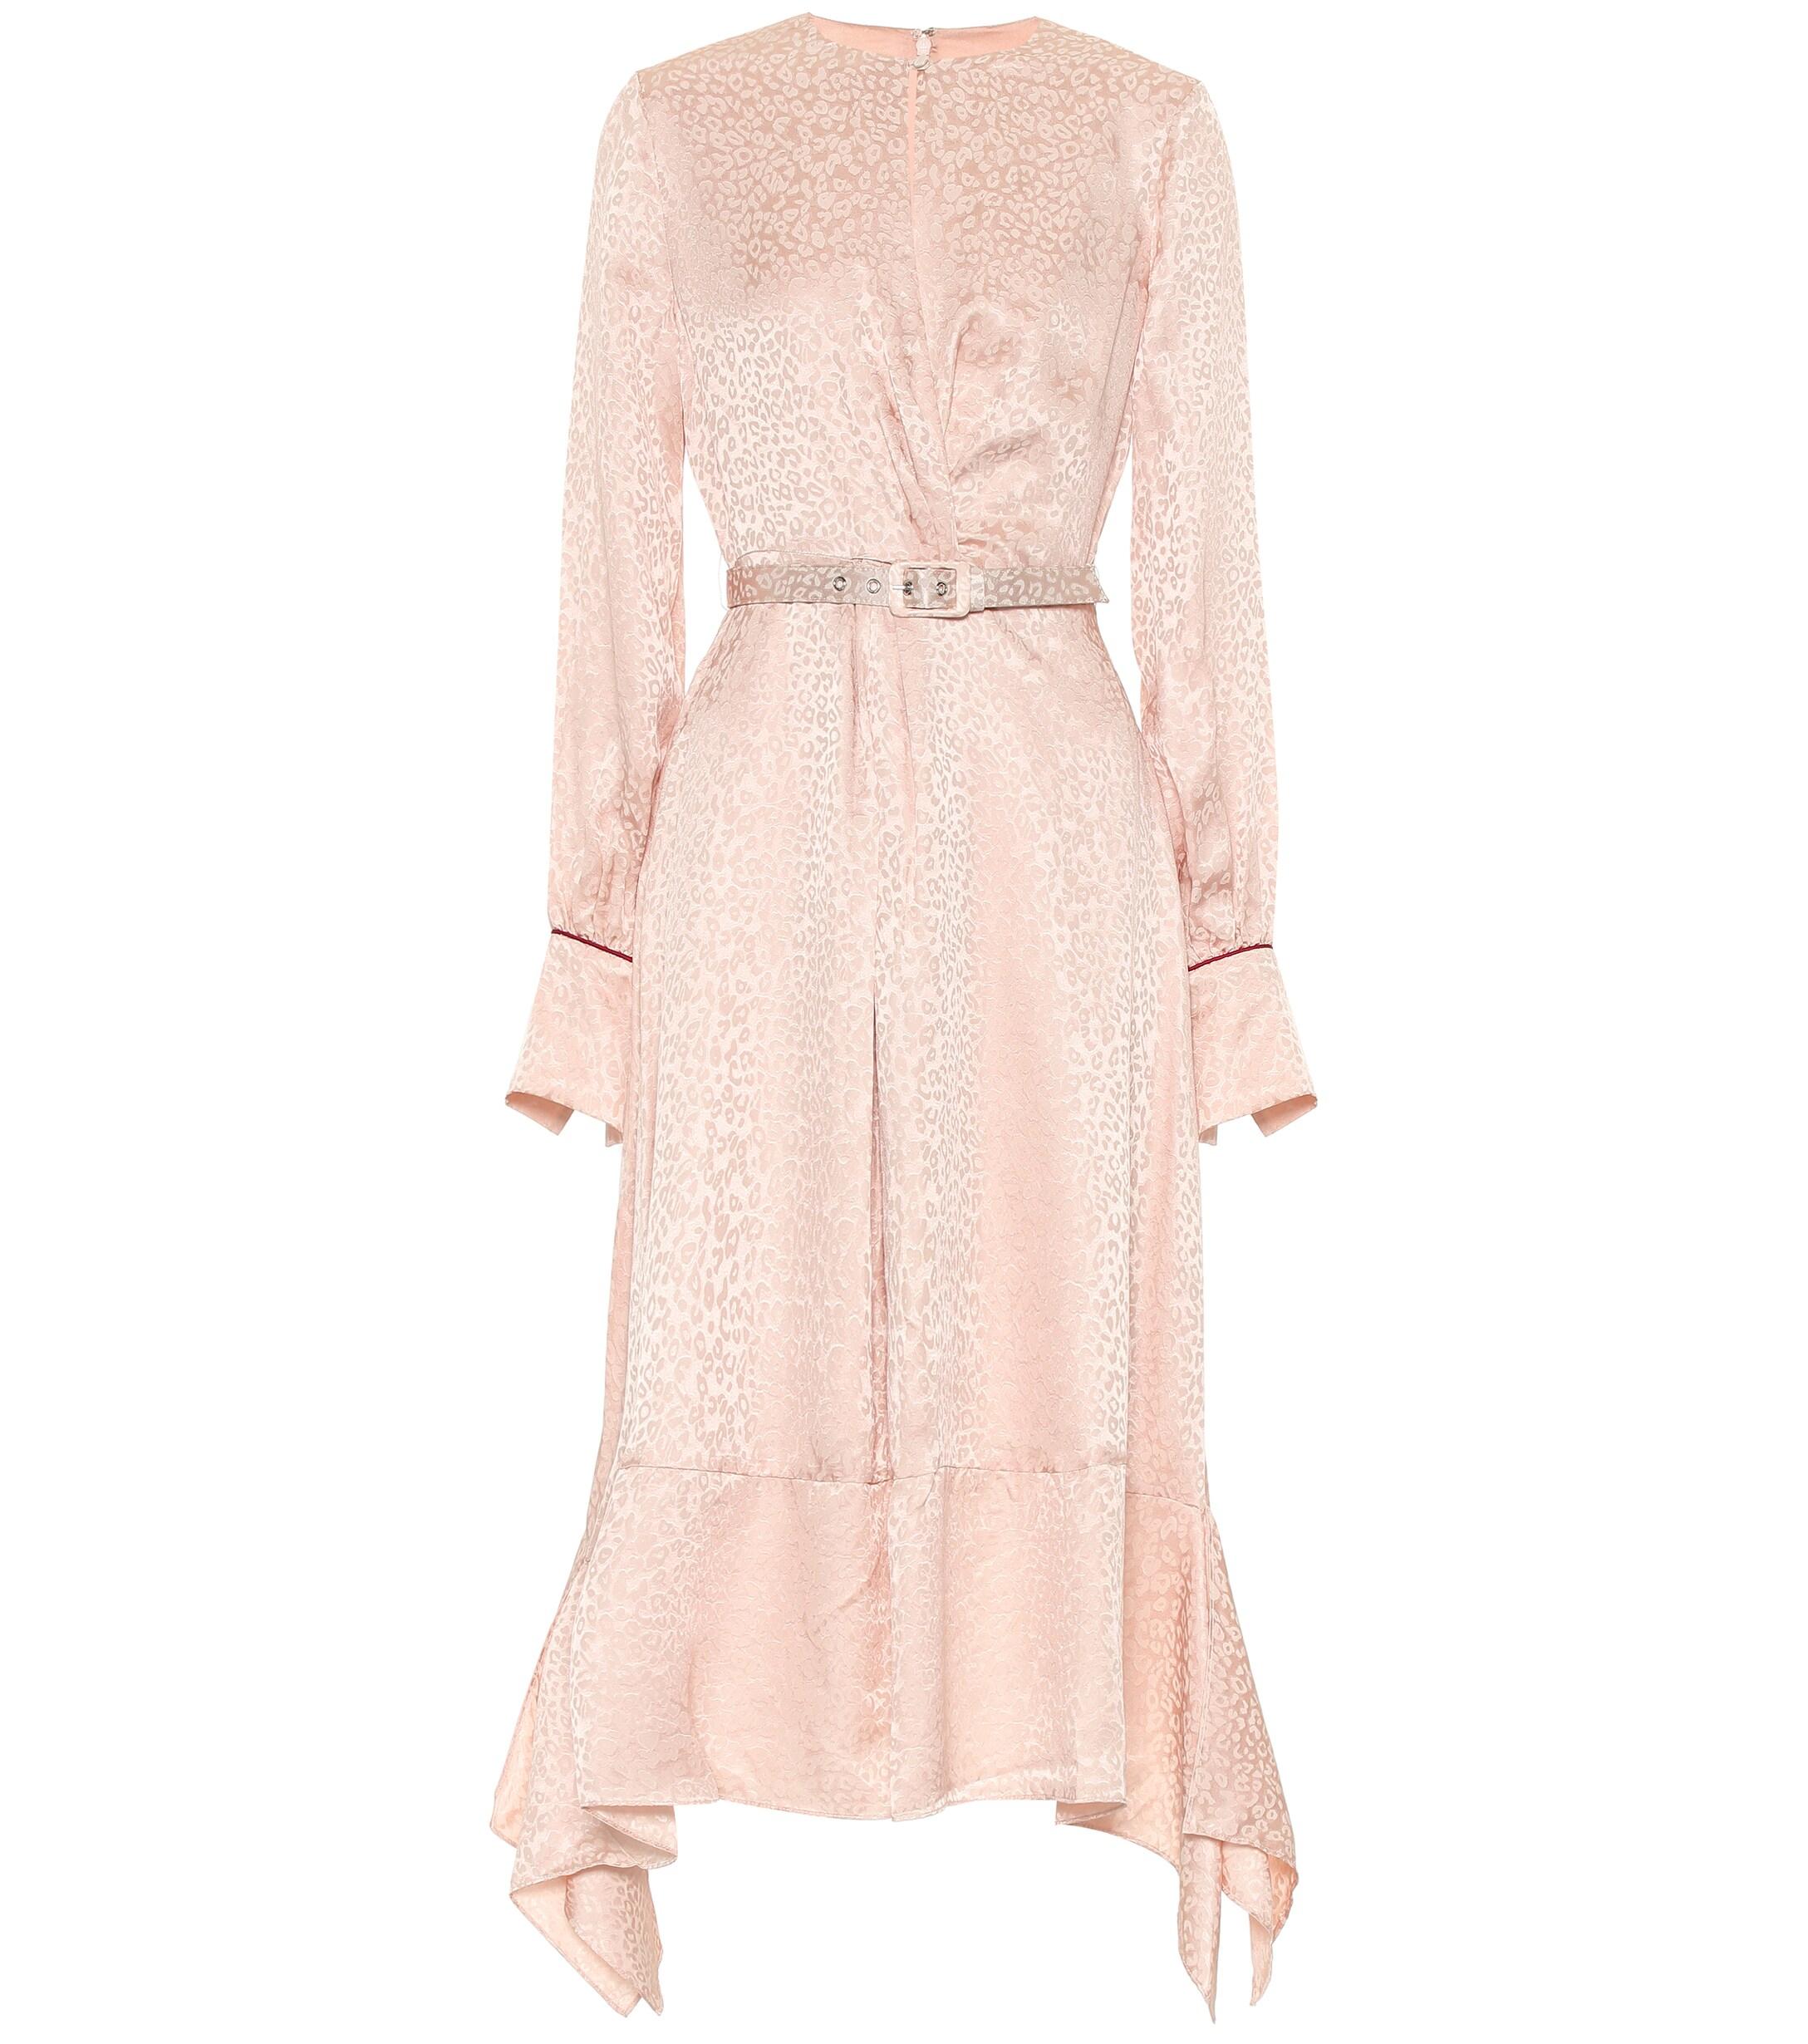 Jonathan Simkhai Silk-blend Jacquard Midi Dress in Pink - Lyst